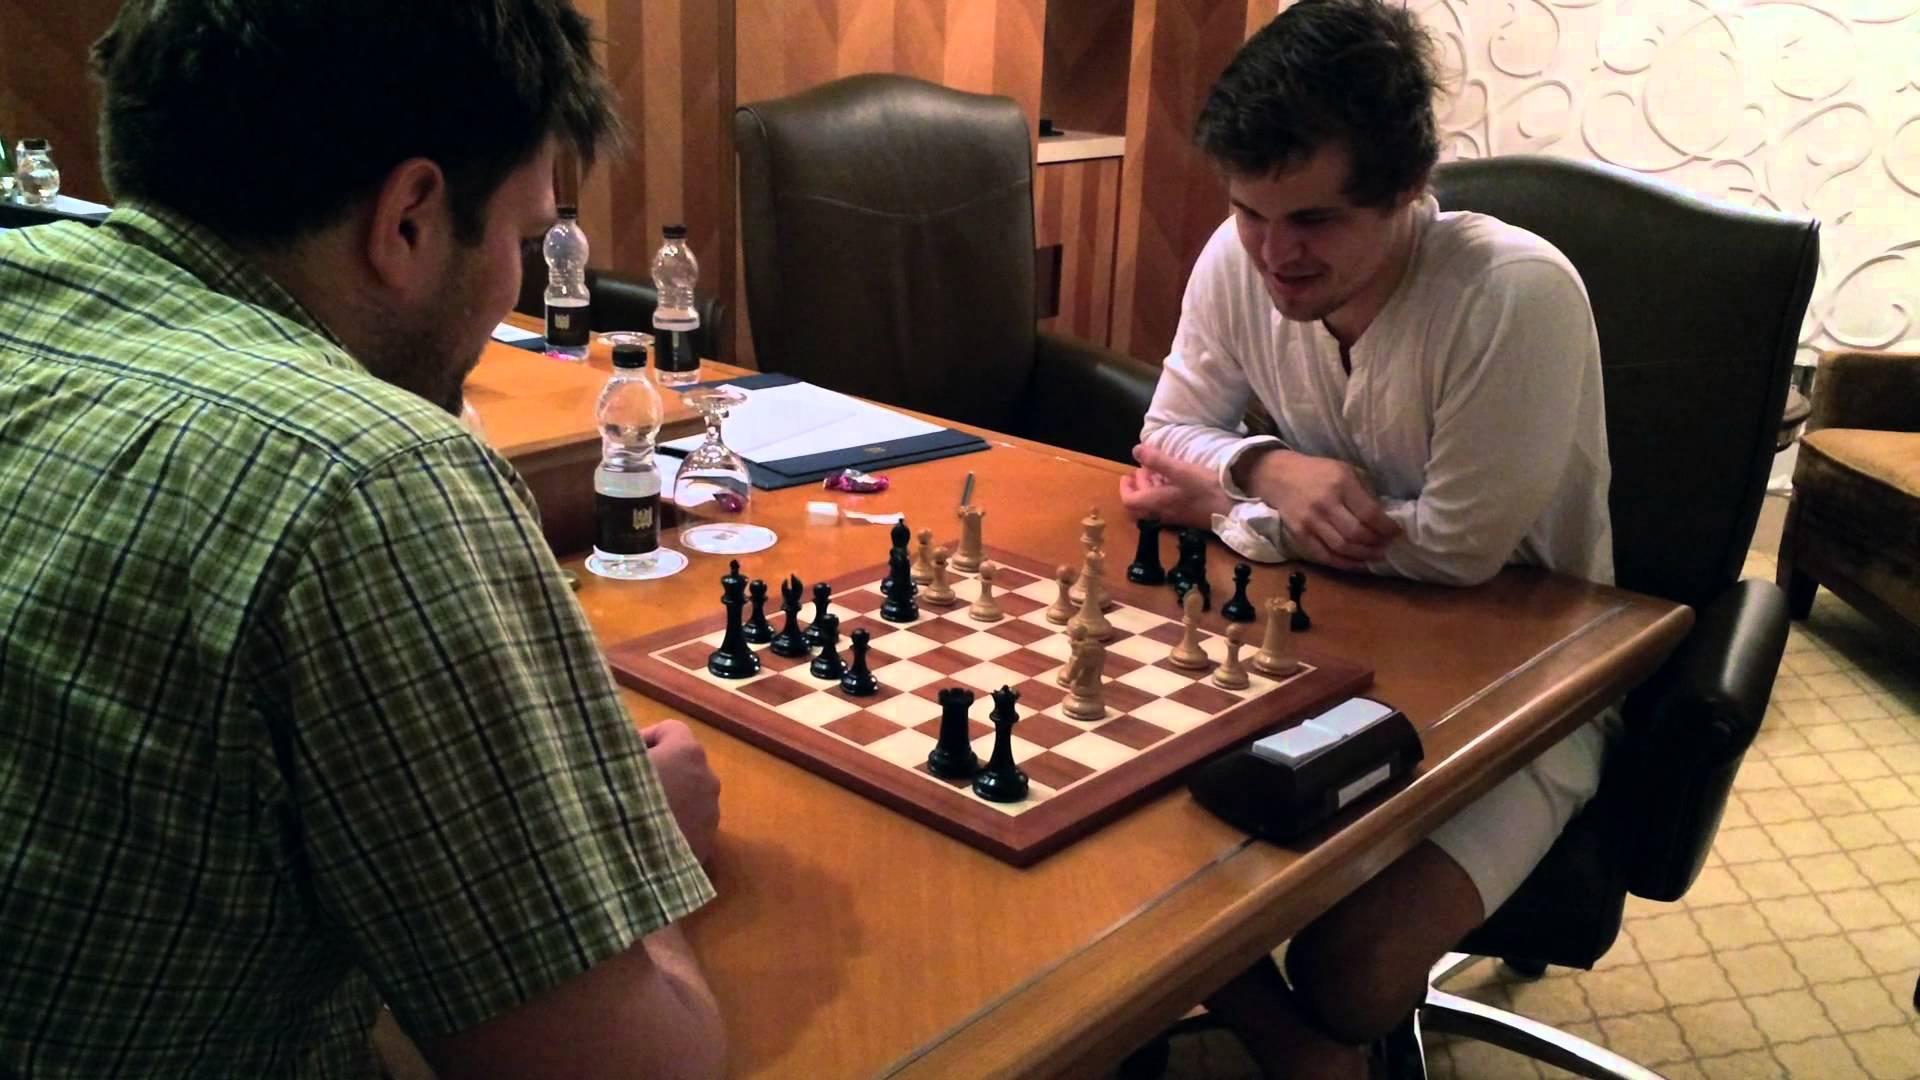 We like playing chess